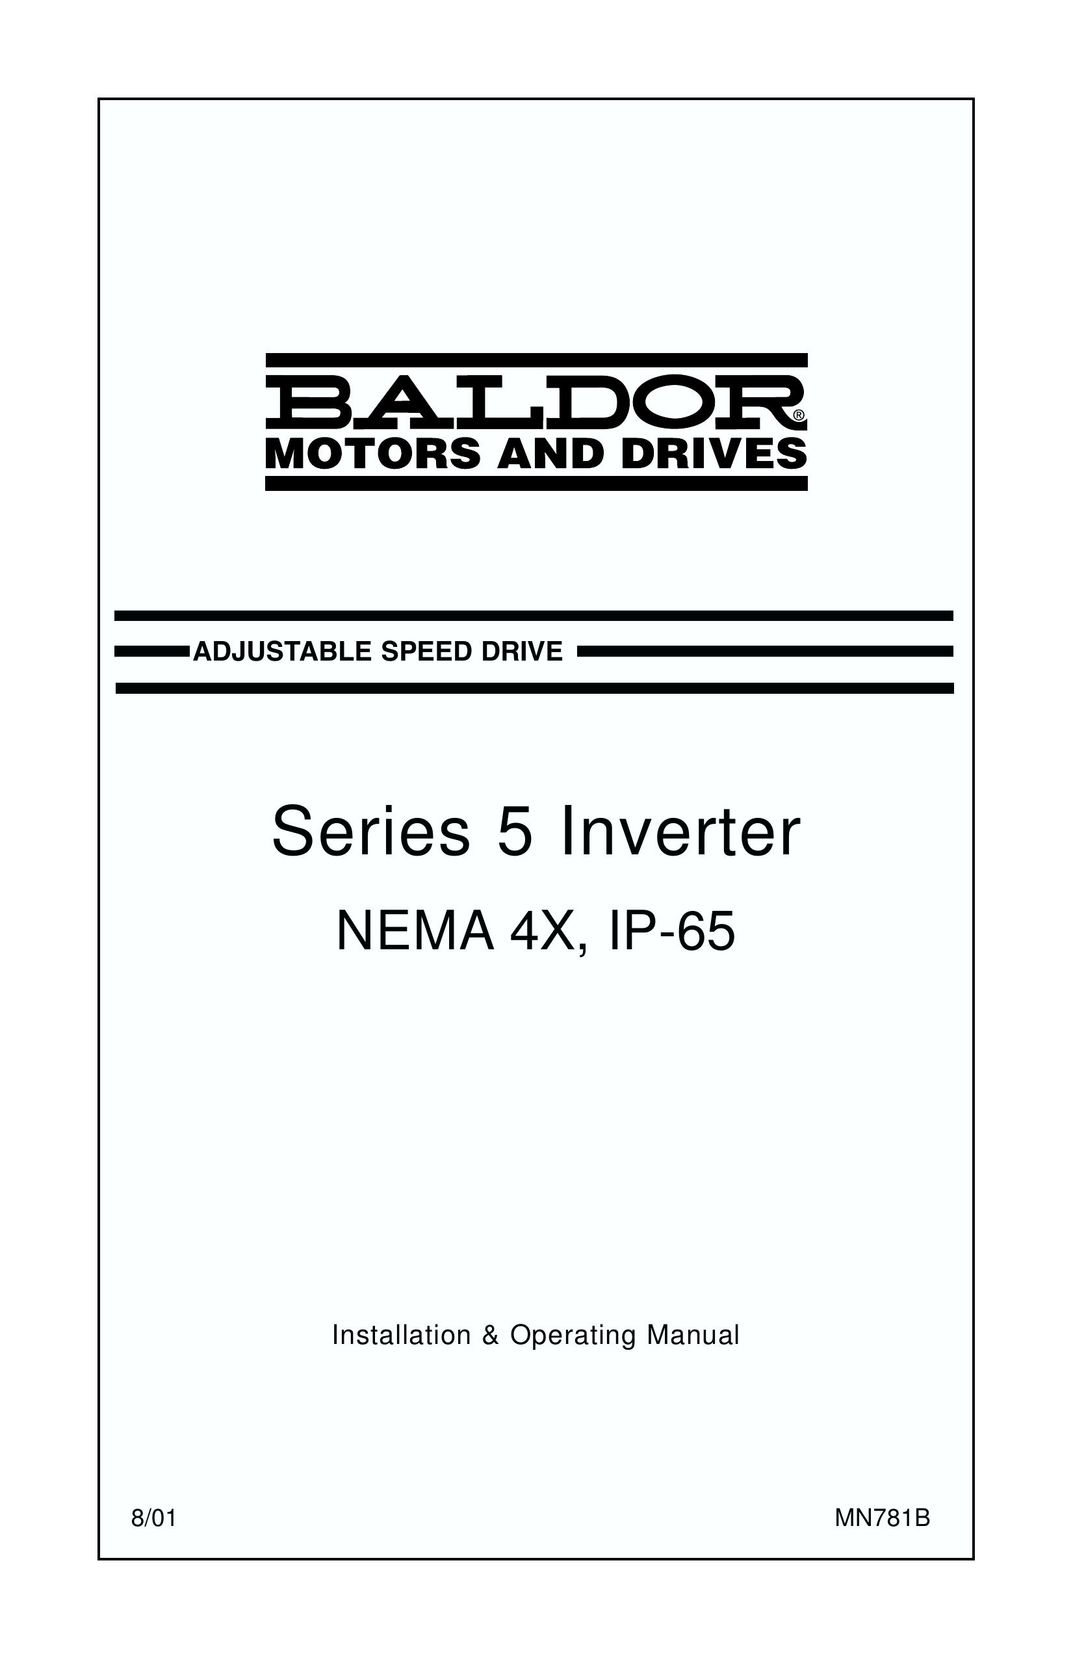 Baldor NEMA 4X Power Supply User Manual